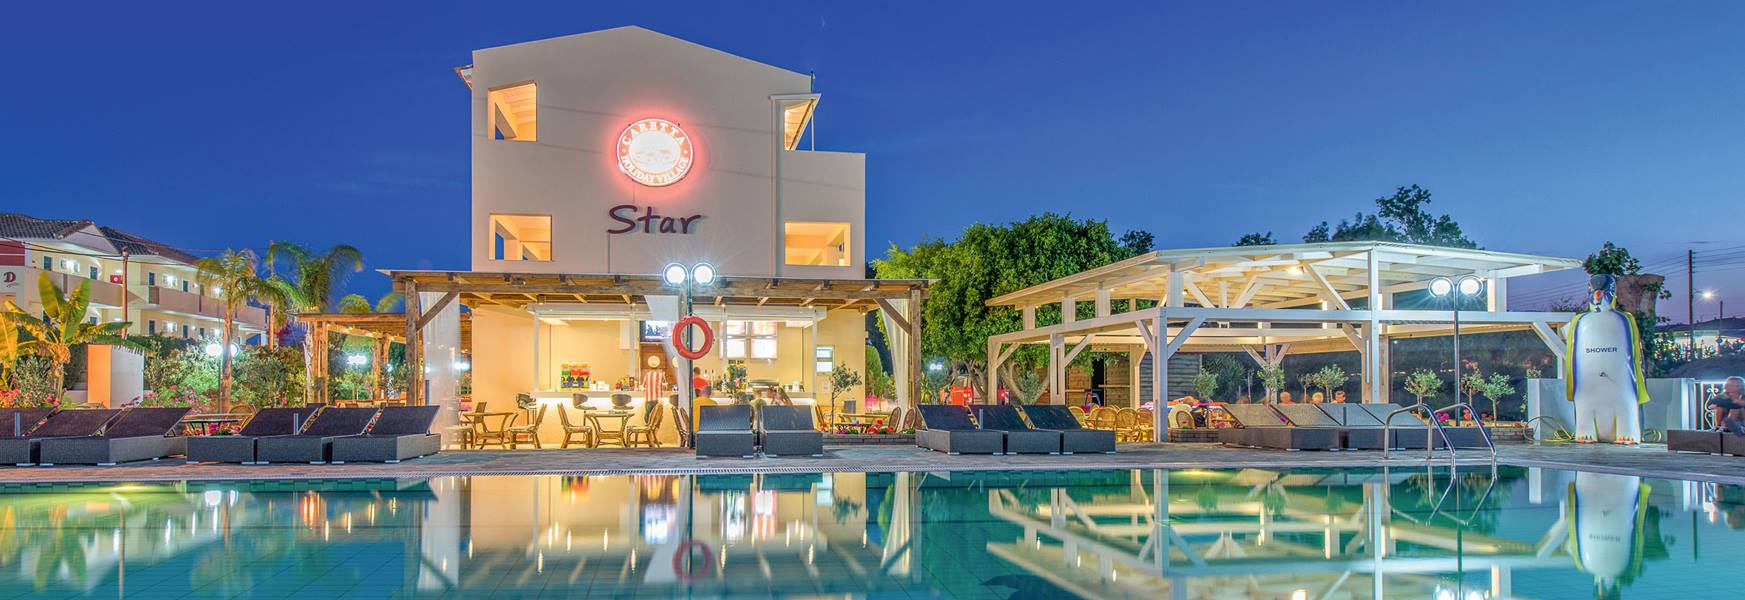 Hotel Caretta Star